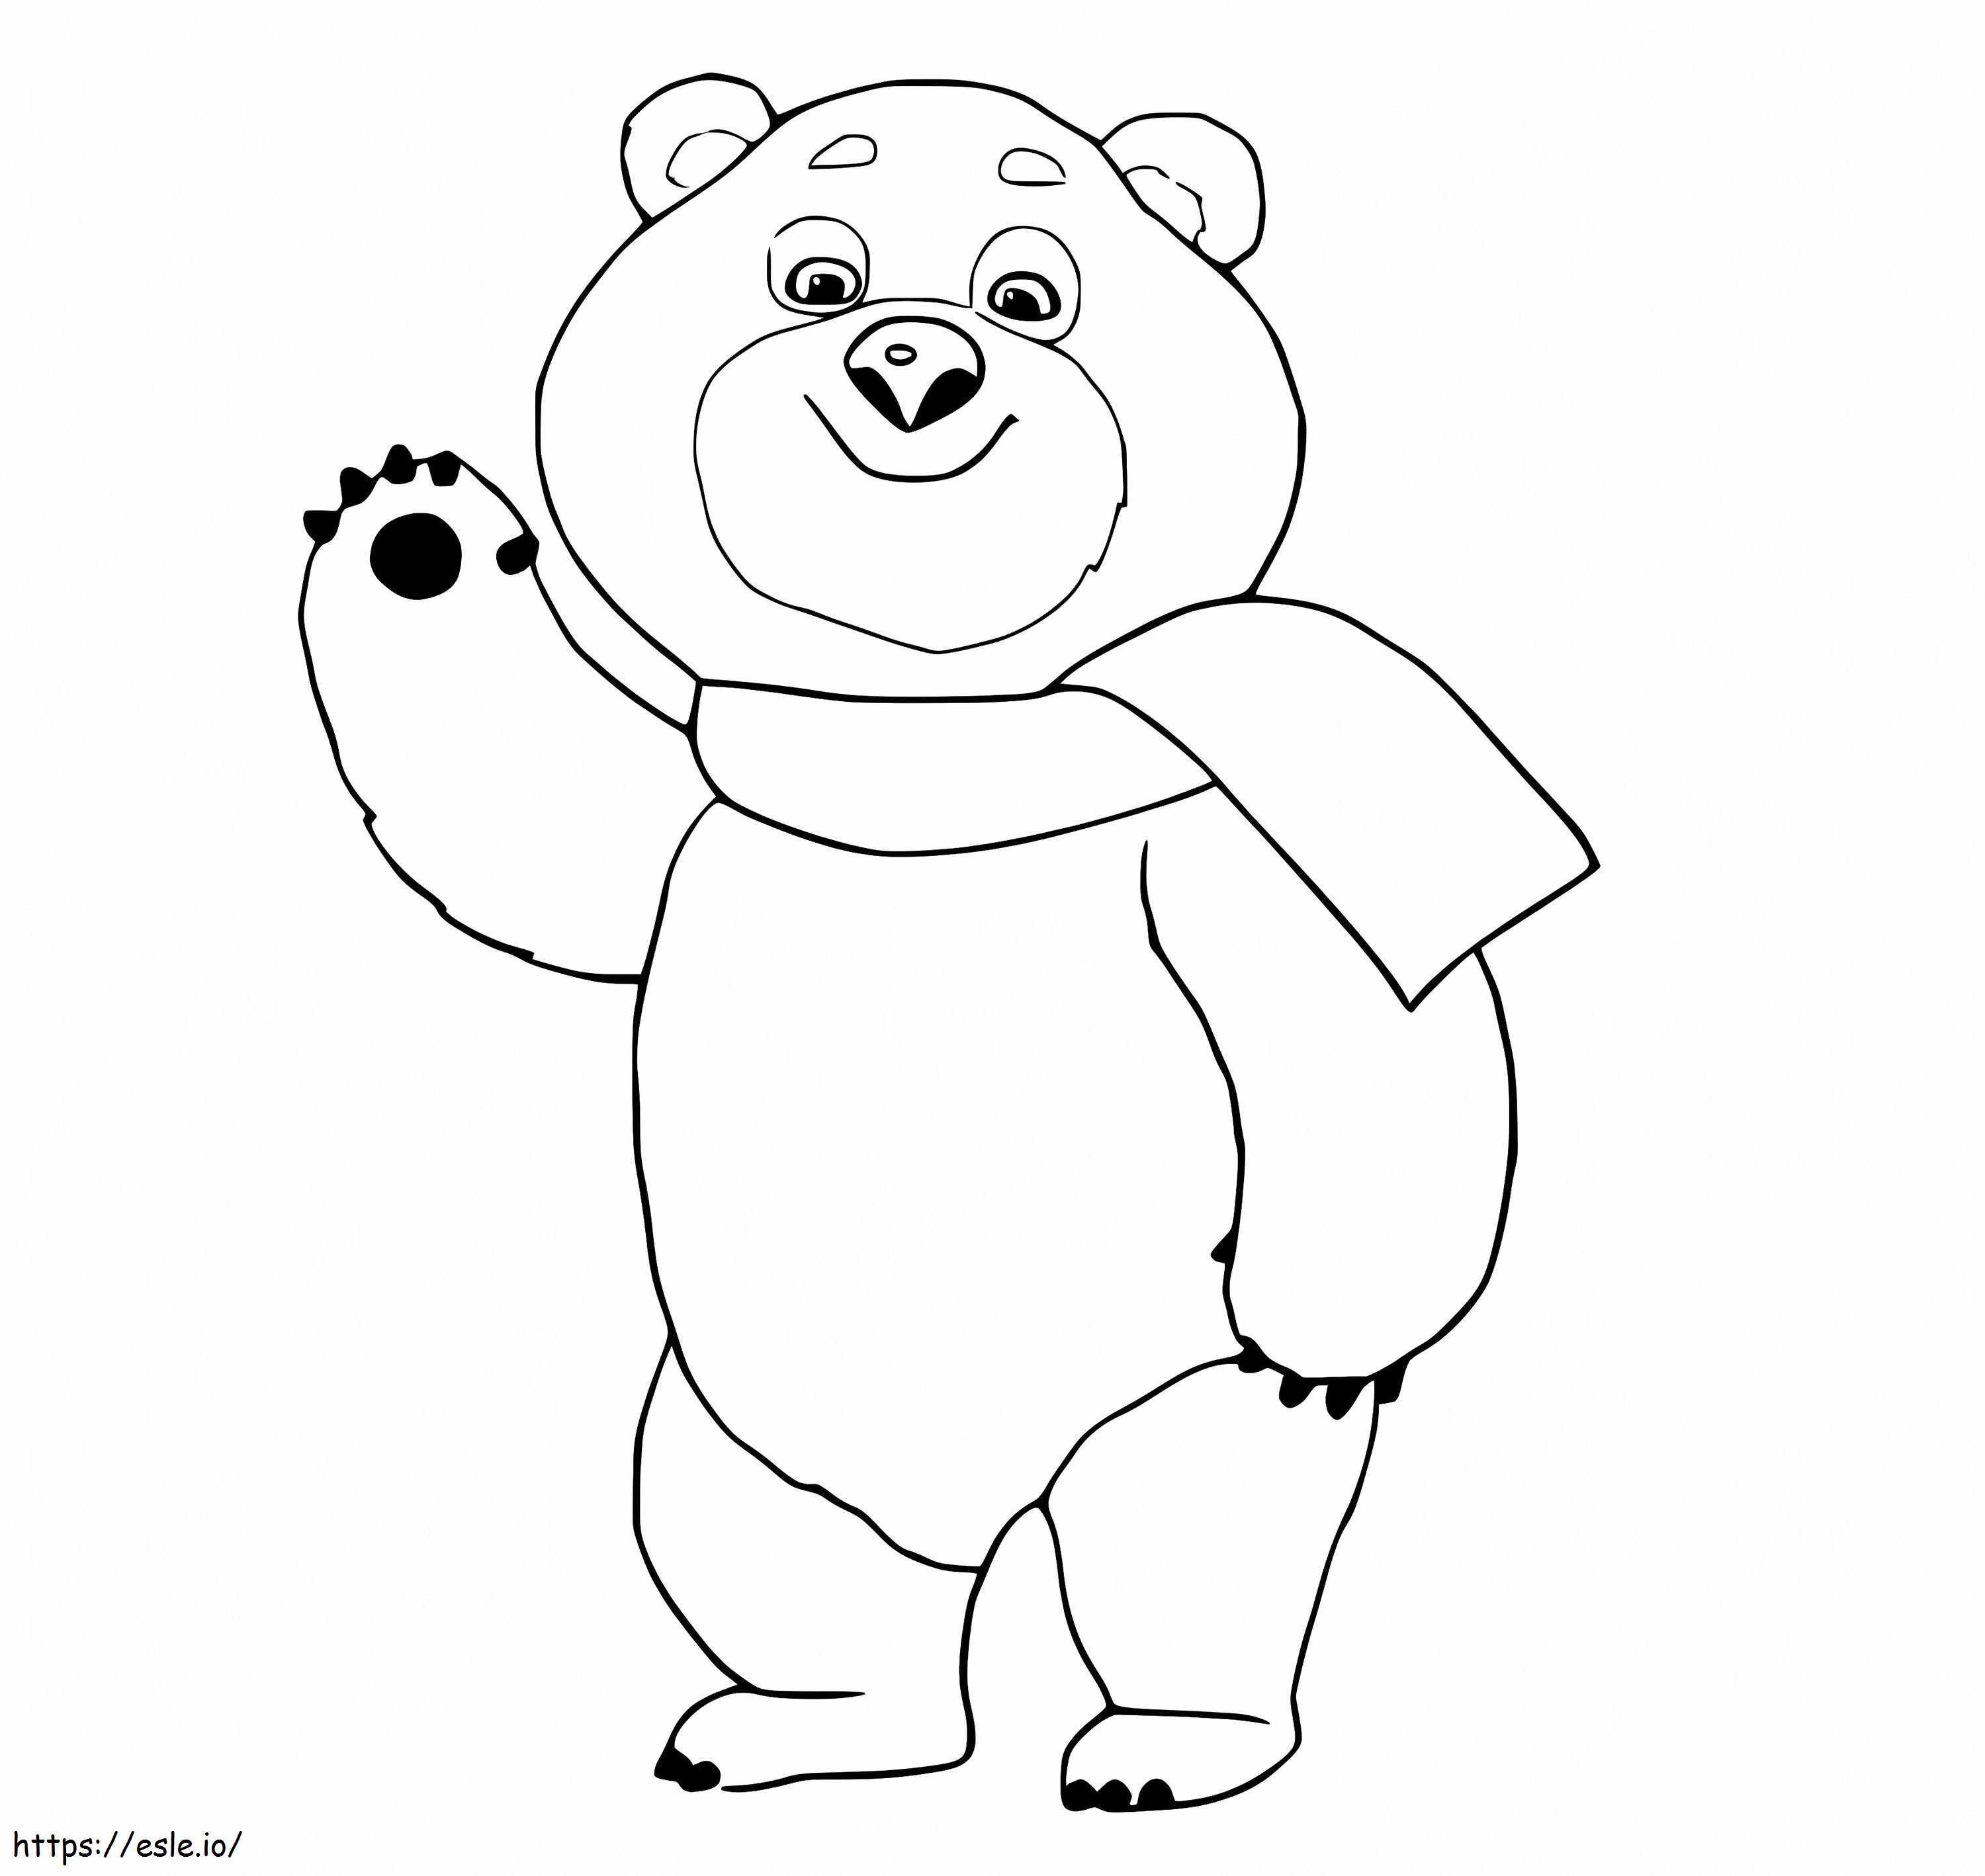 Friendly Panda coloring page